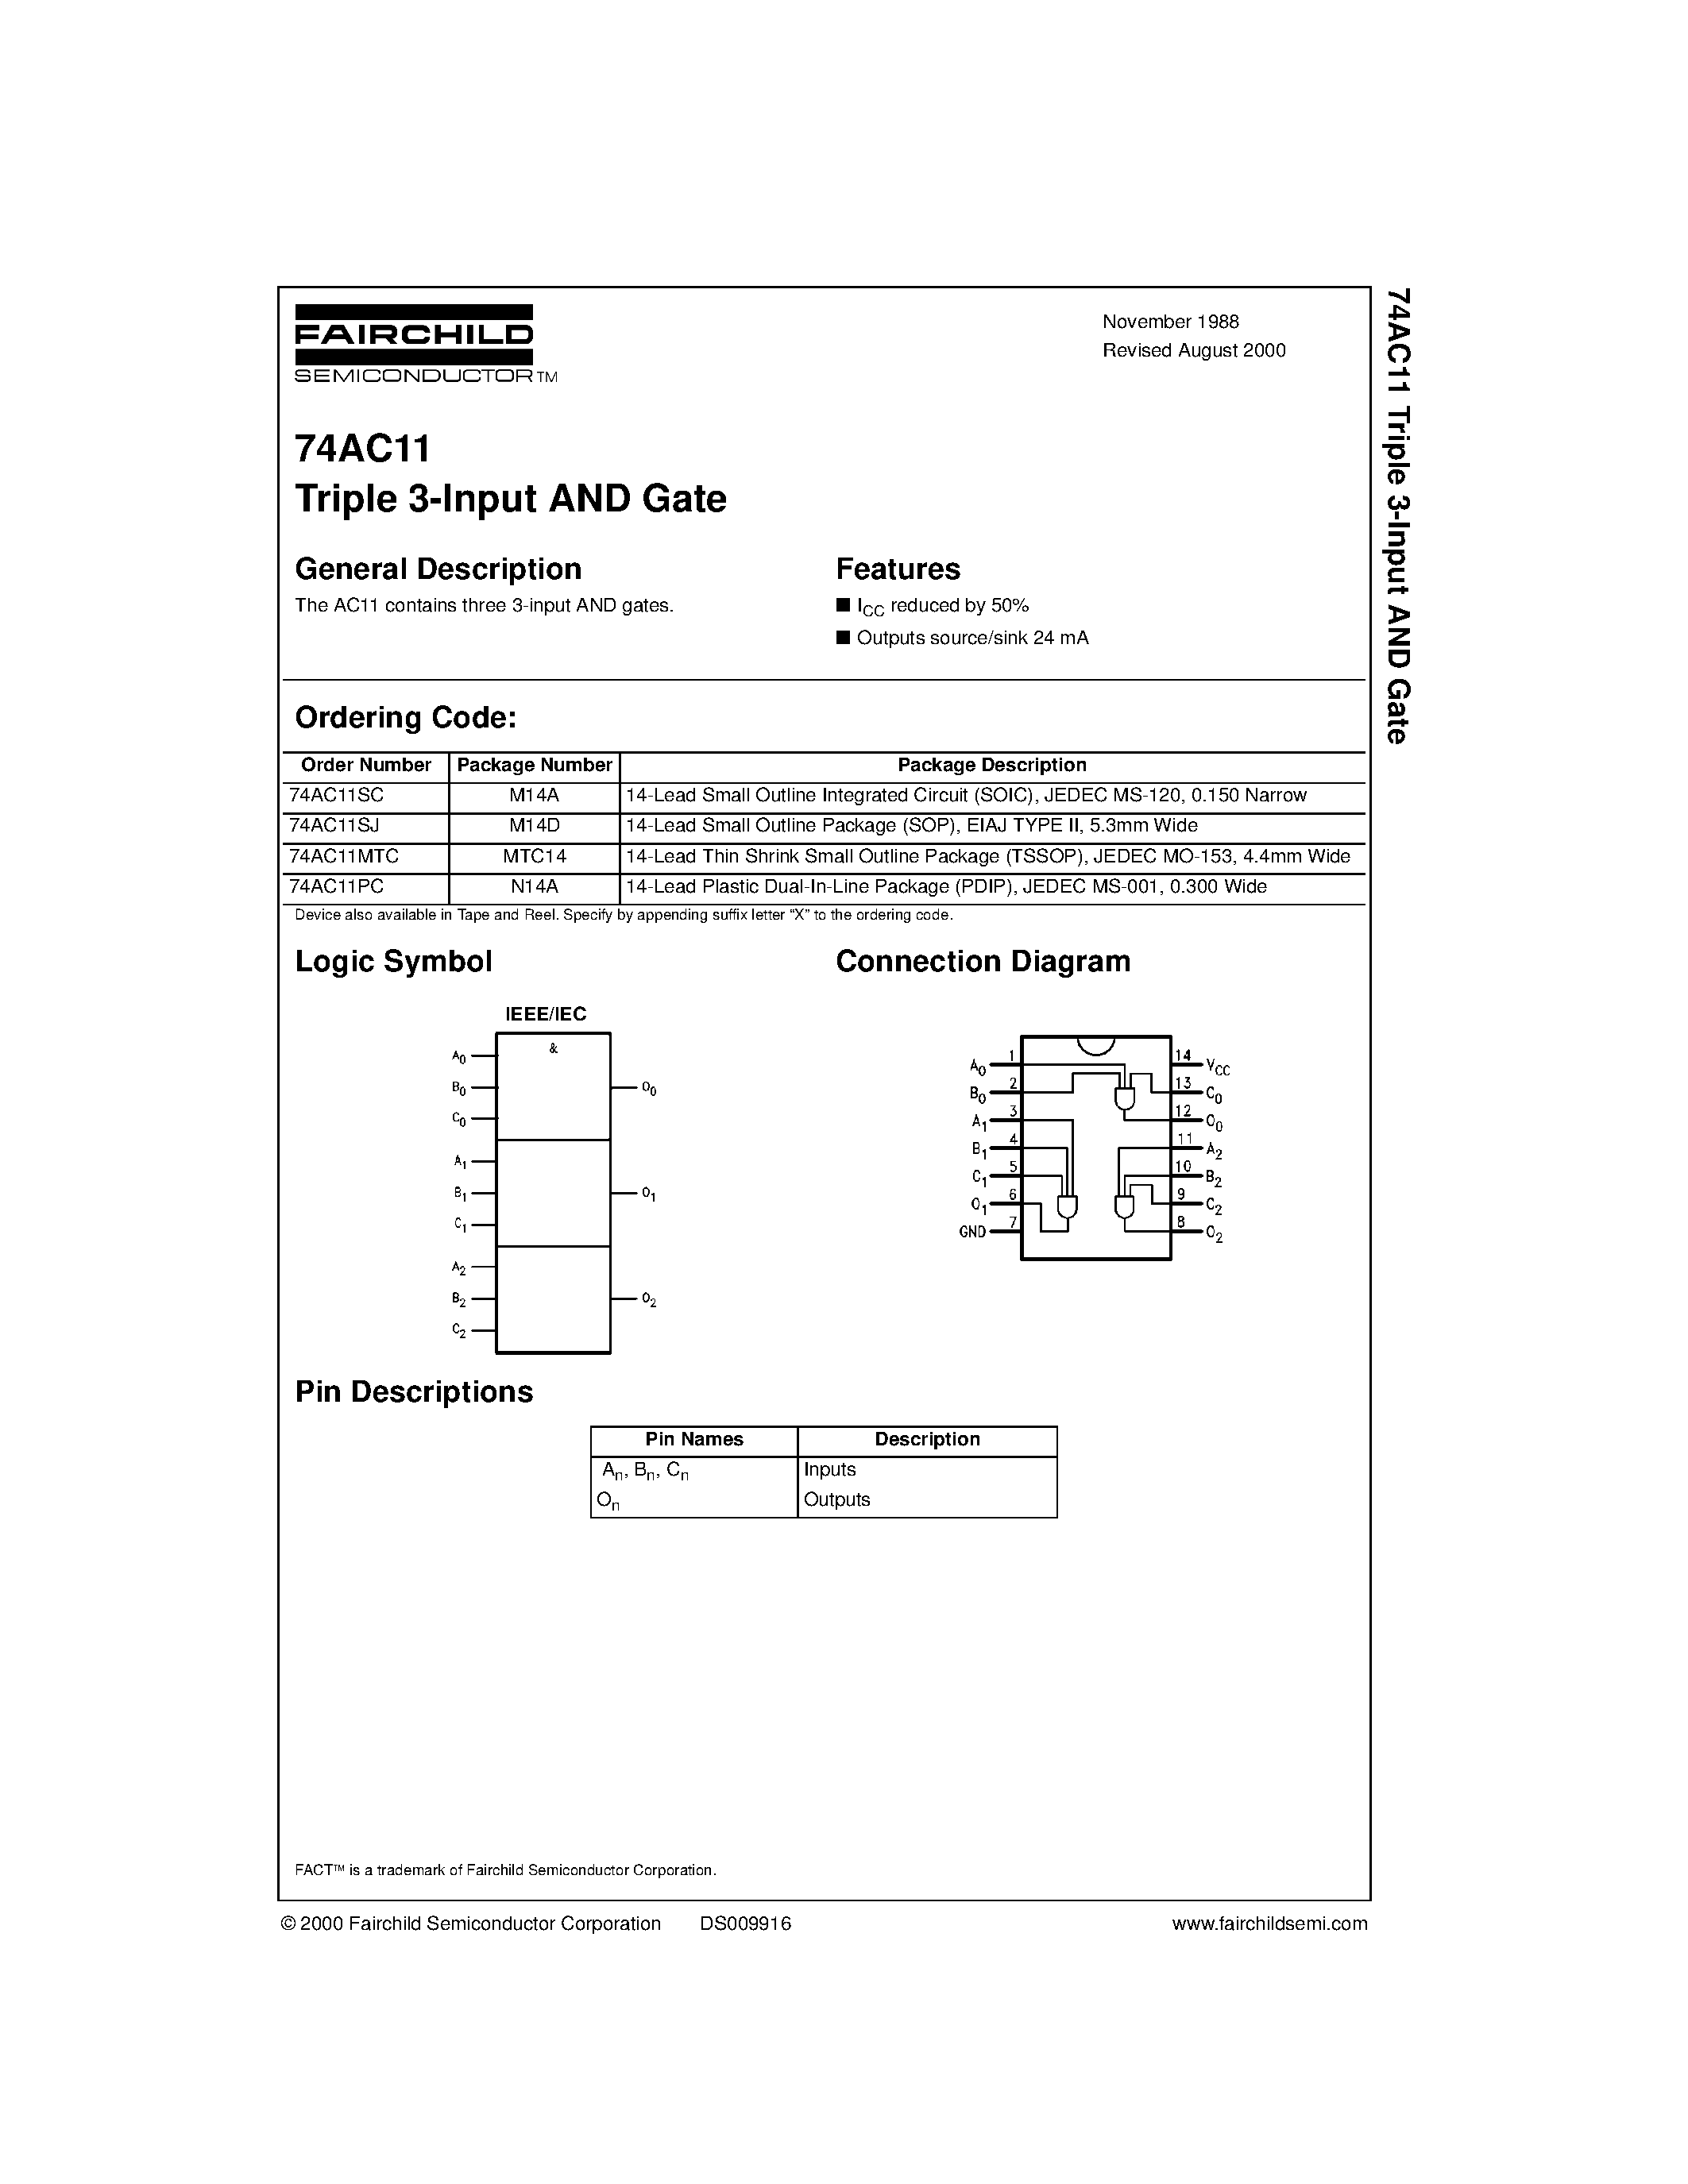 Datasheet 74AC11PC - Triple 3-Input AND Gate page 1